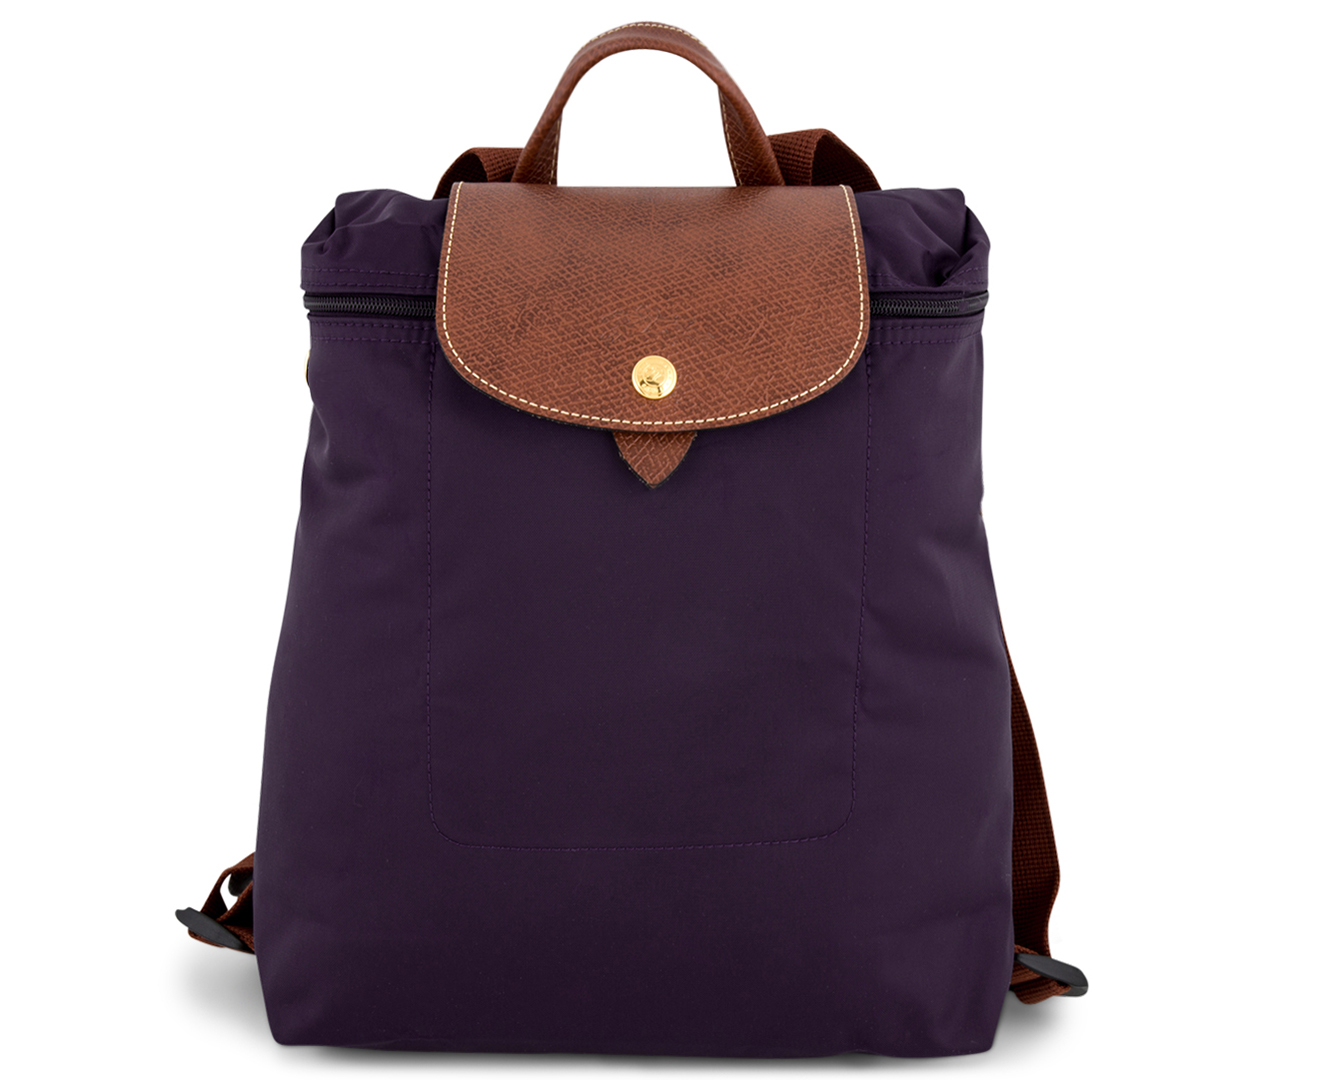 Longchamp Le Pliage Backpack - Bilberry 3597920776704 | eBay